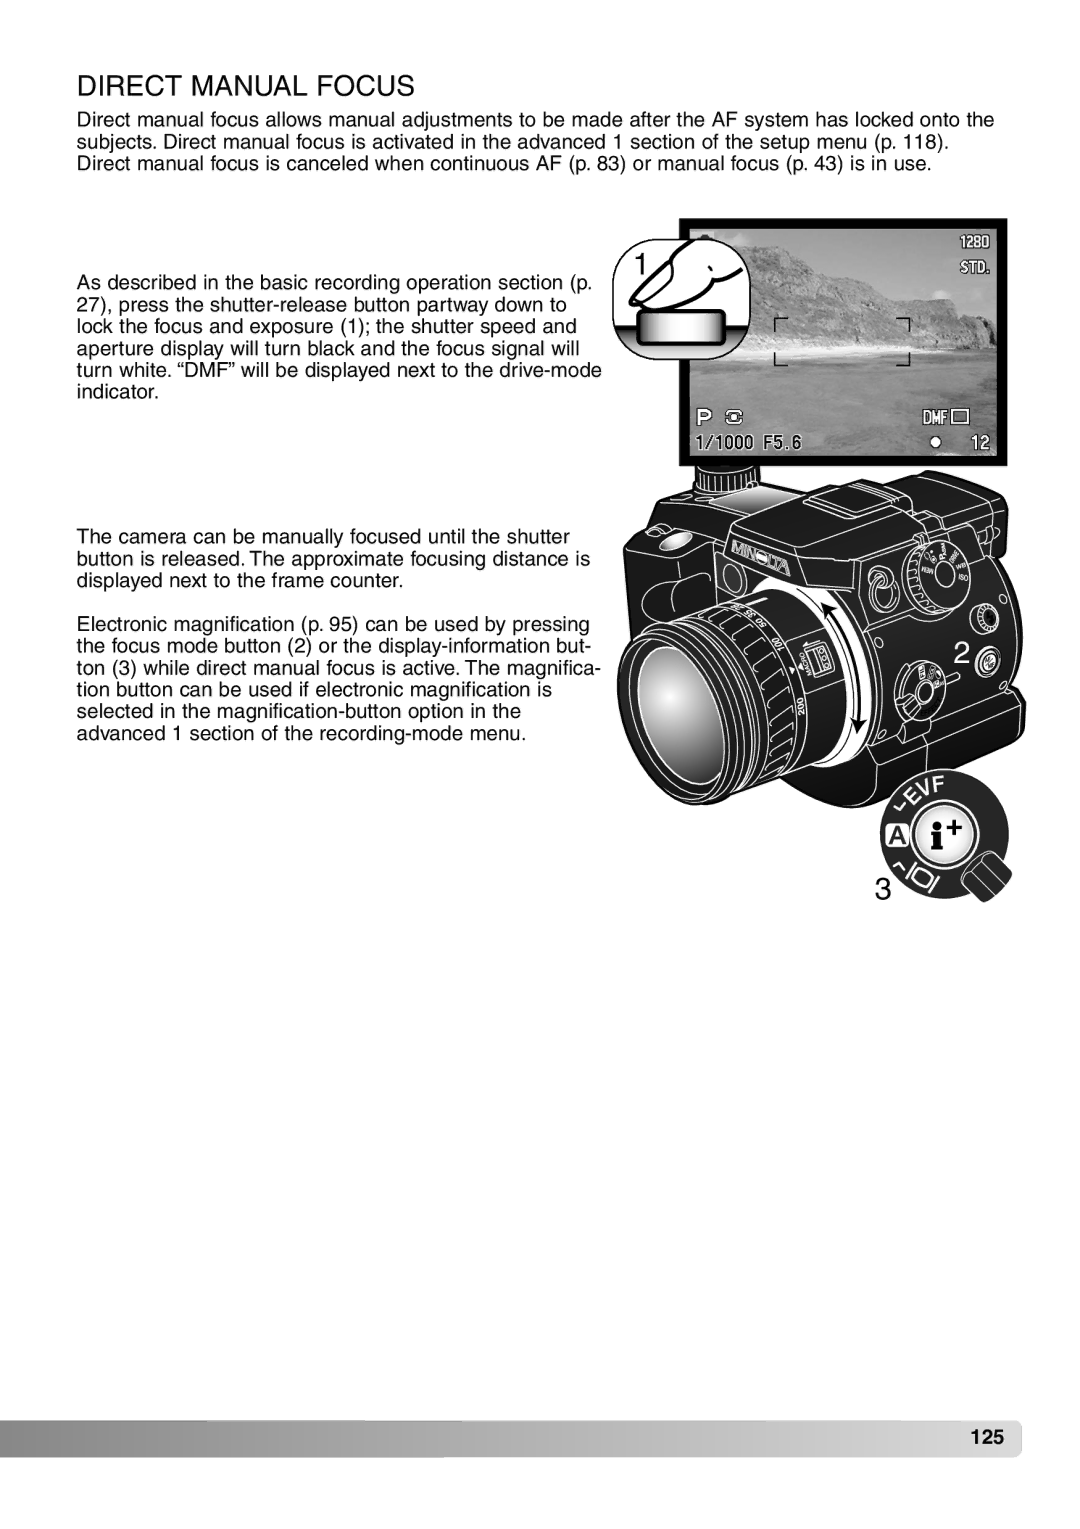 Konica Minolta 7Hi instruction manual Direct Manual Focus 